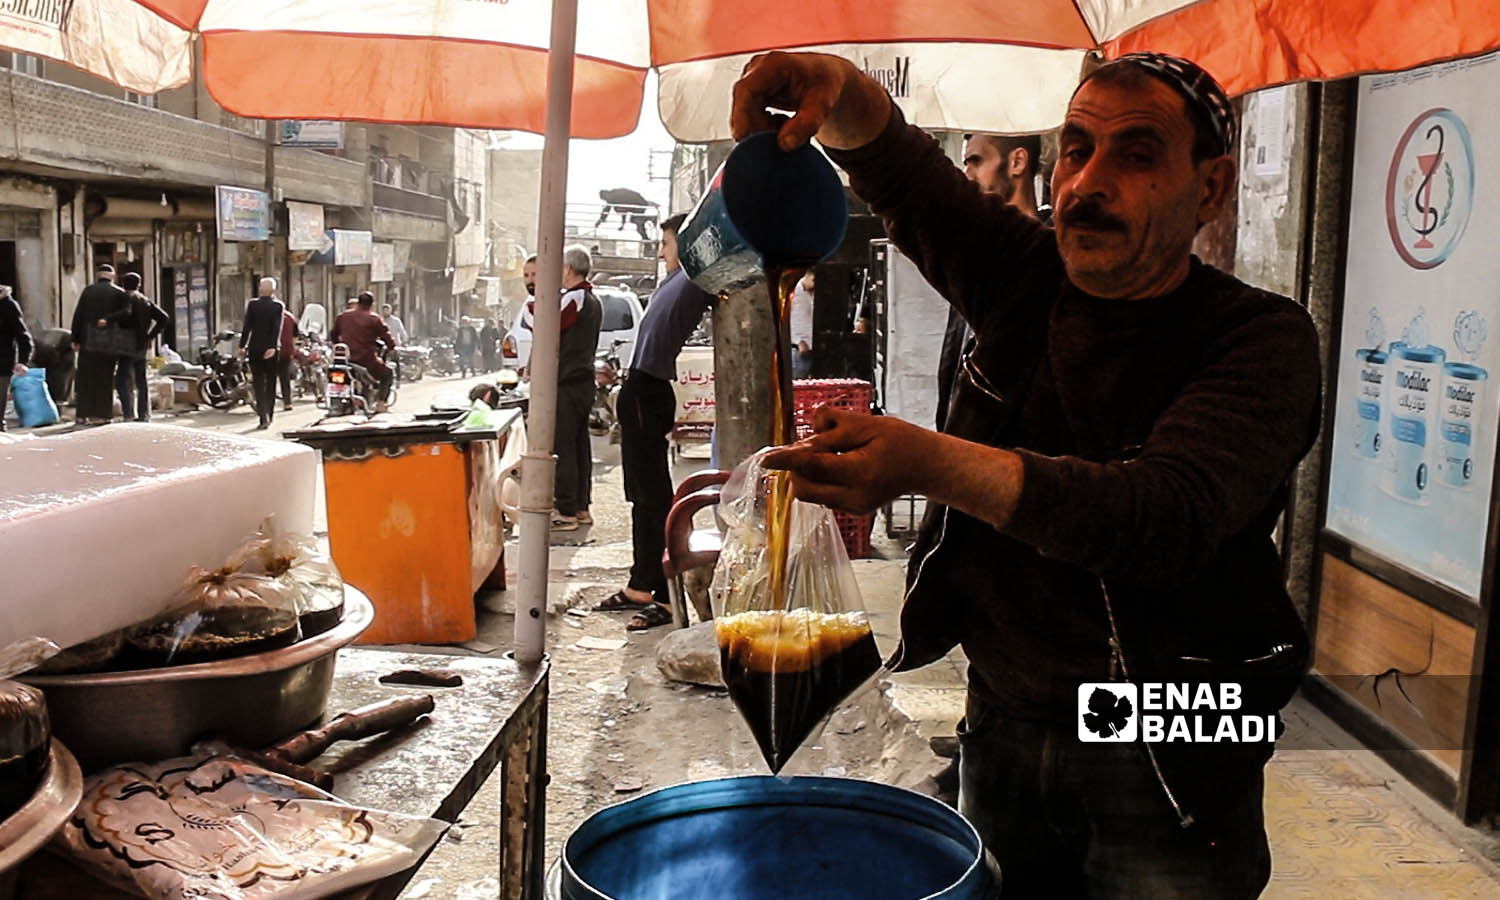 Sale of Ramadan beverages on the streets of Idlib city in northwest Syria - 6 April 2022 (Enab Baladi)